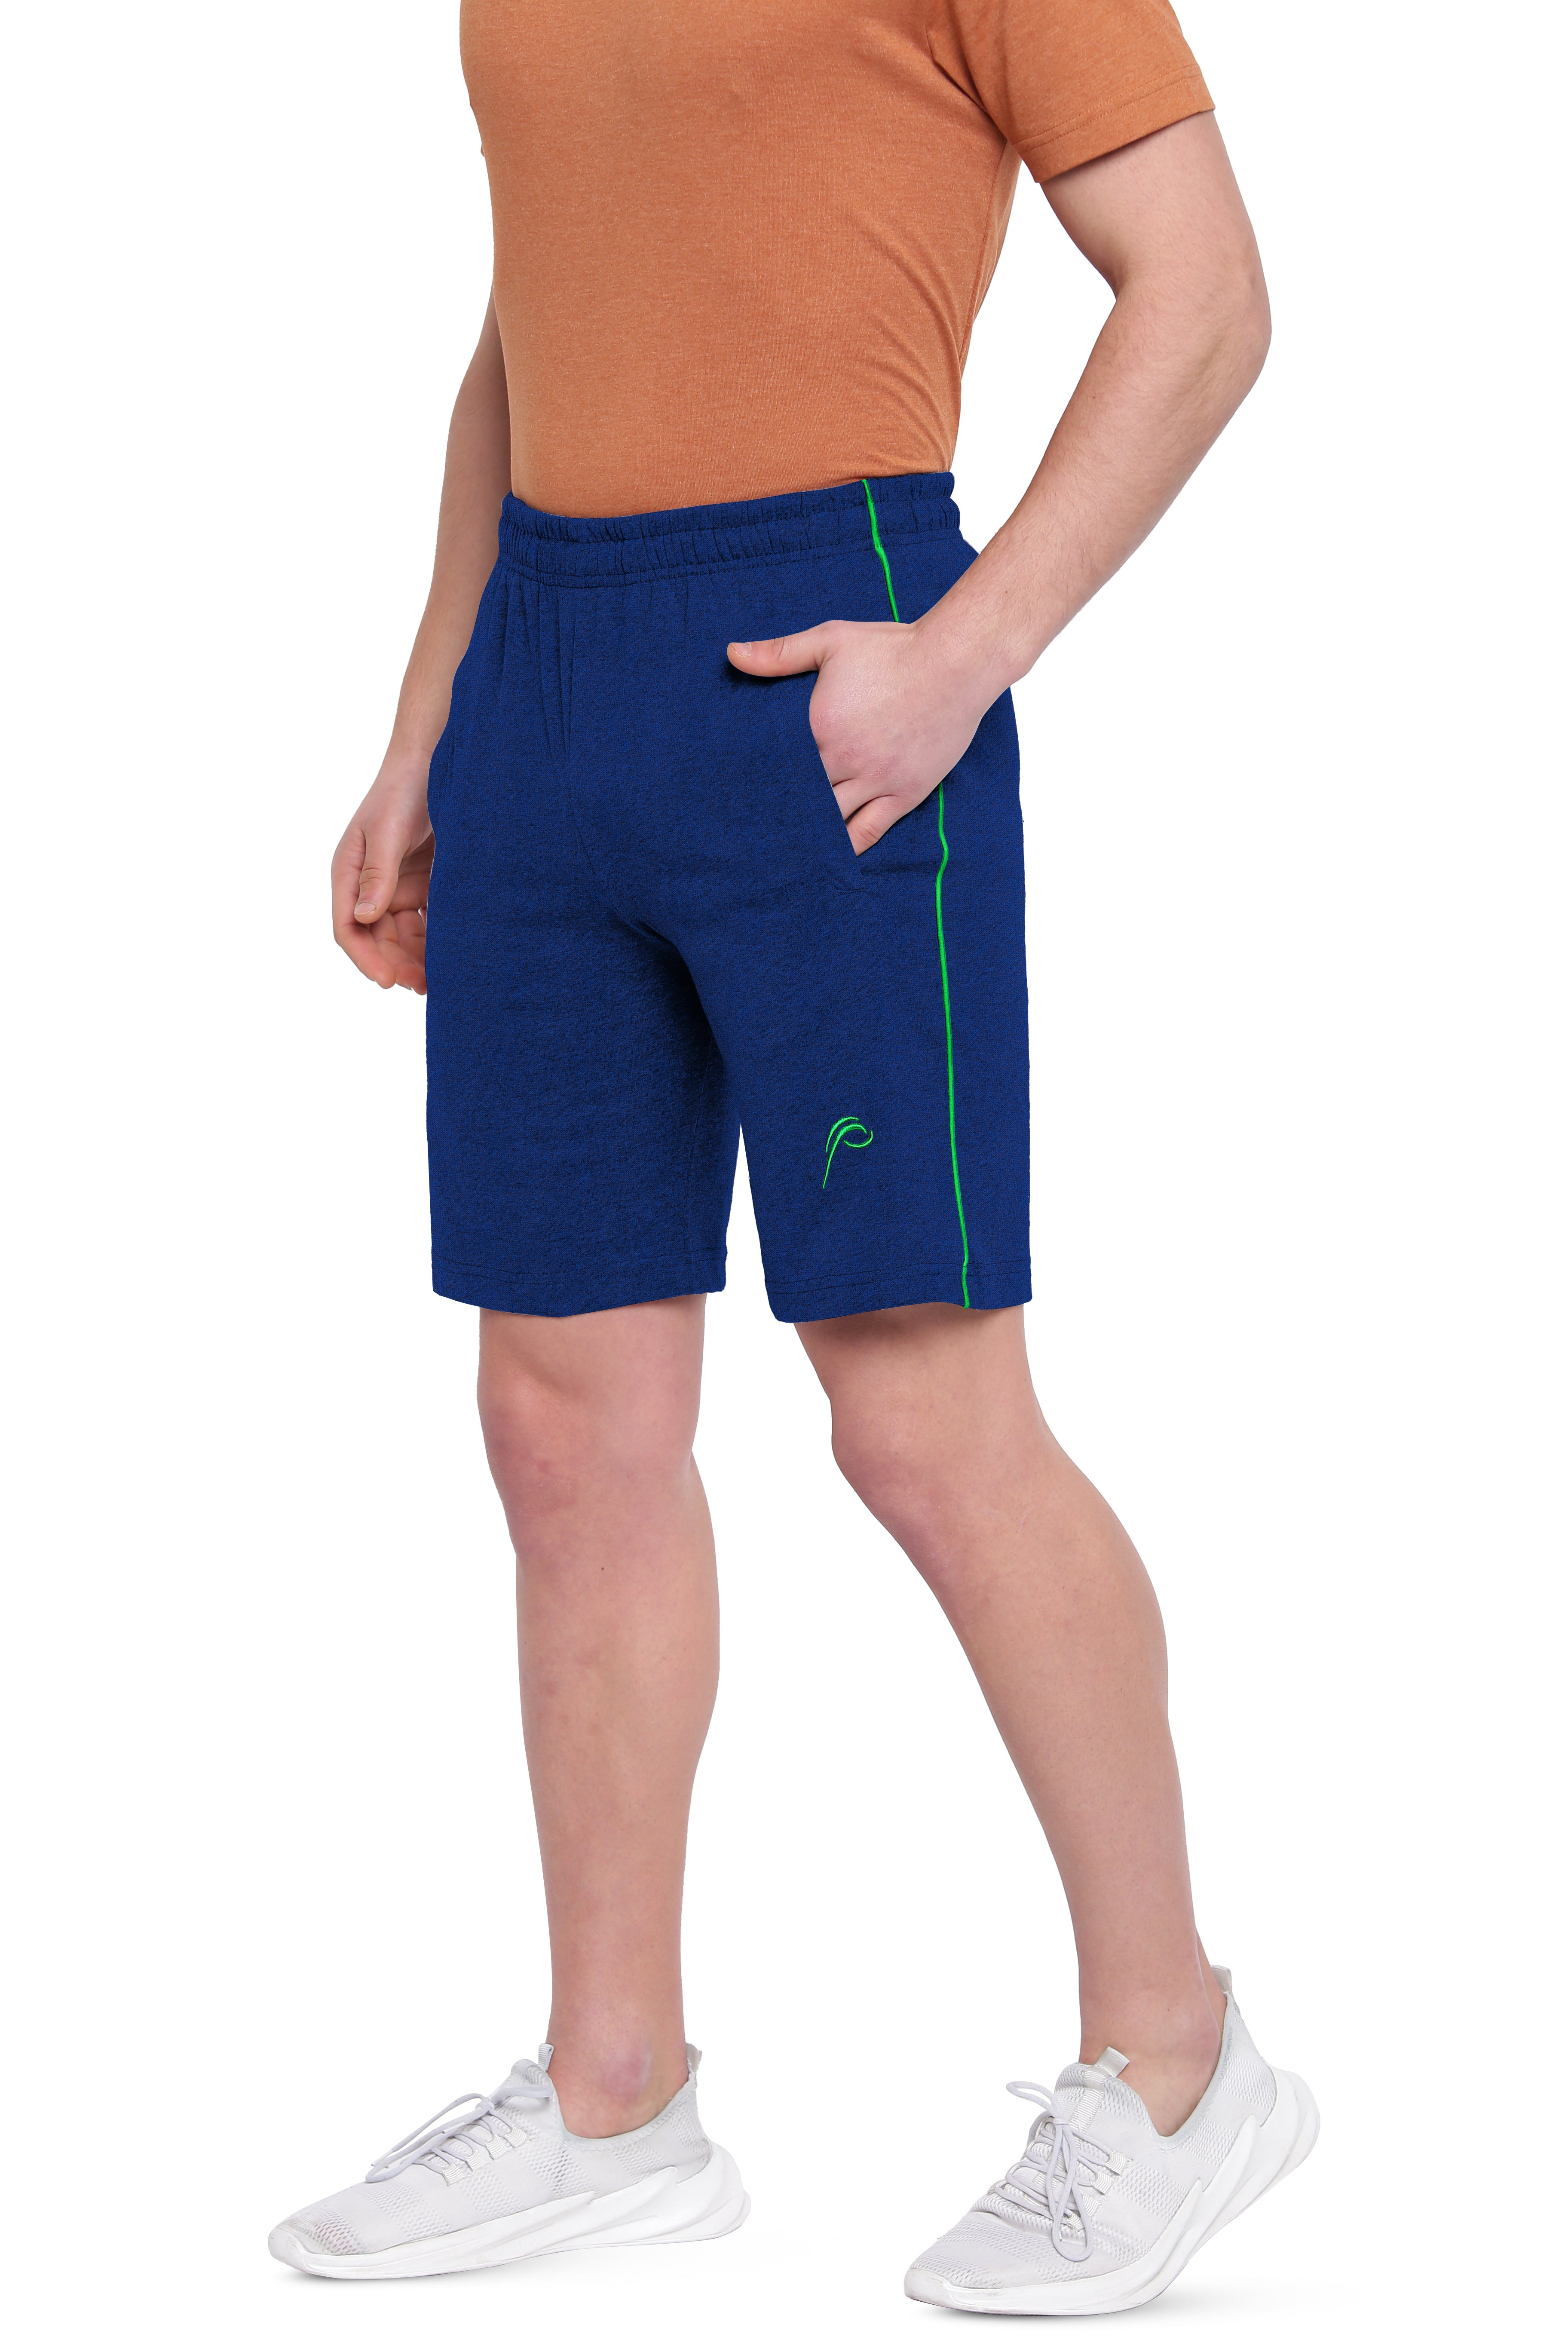 Poomer Casual Shorts - Dark Navy – Poomer Clothing Company